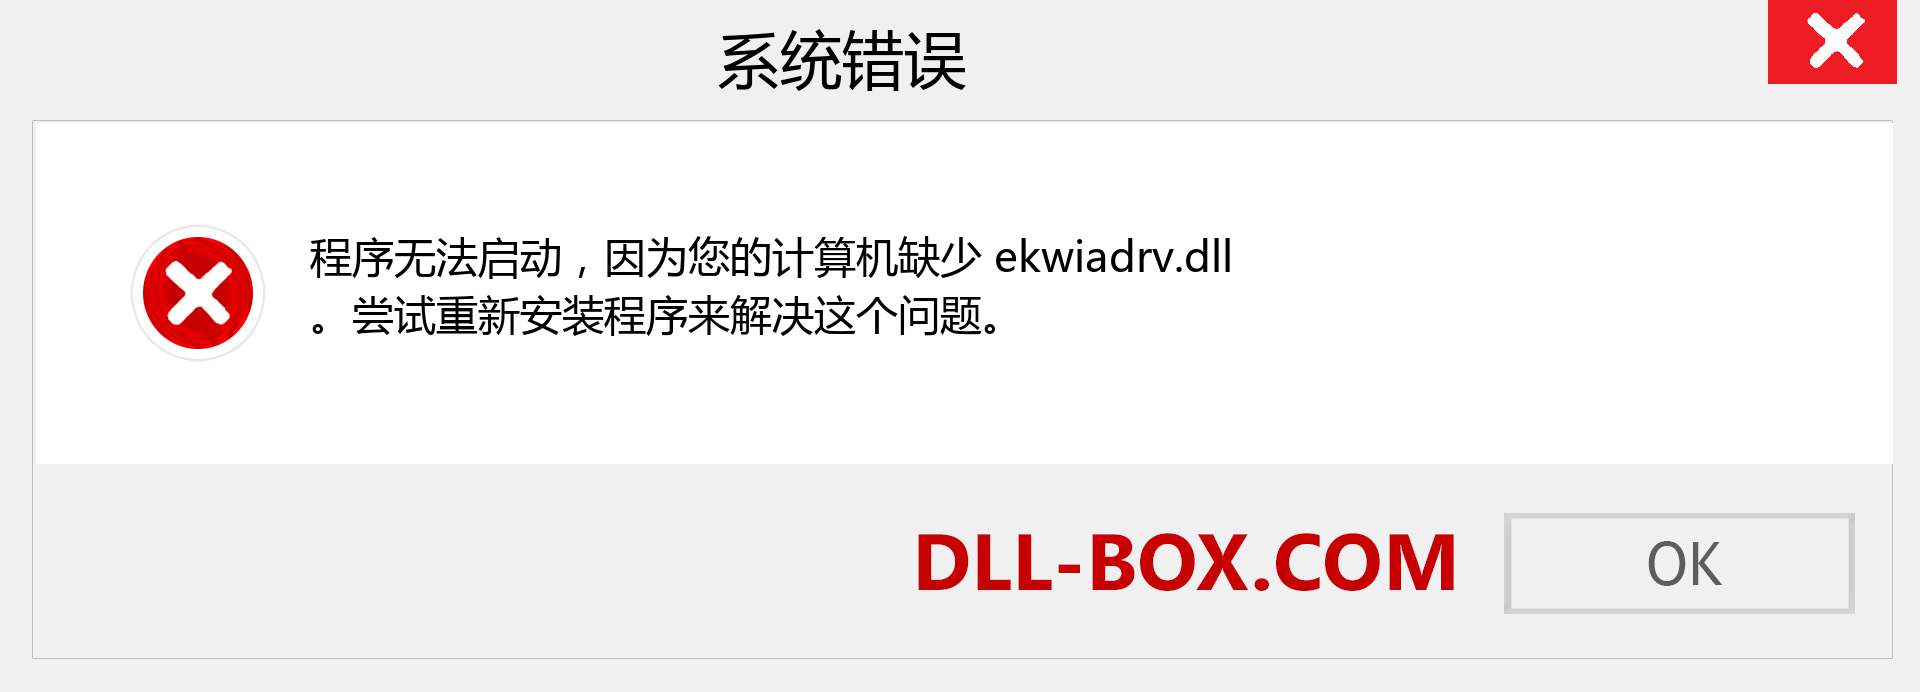 ekwiadrv.dll 文件丢失？。 适用于 Windows 7、8、10 的下载 - 修复 Windows、照片、图像上的 ekwiadrv dll 丢失错误